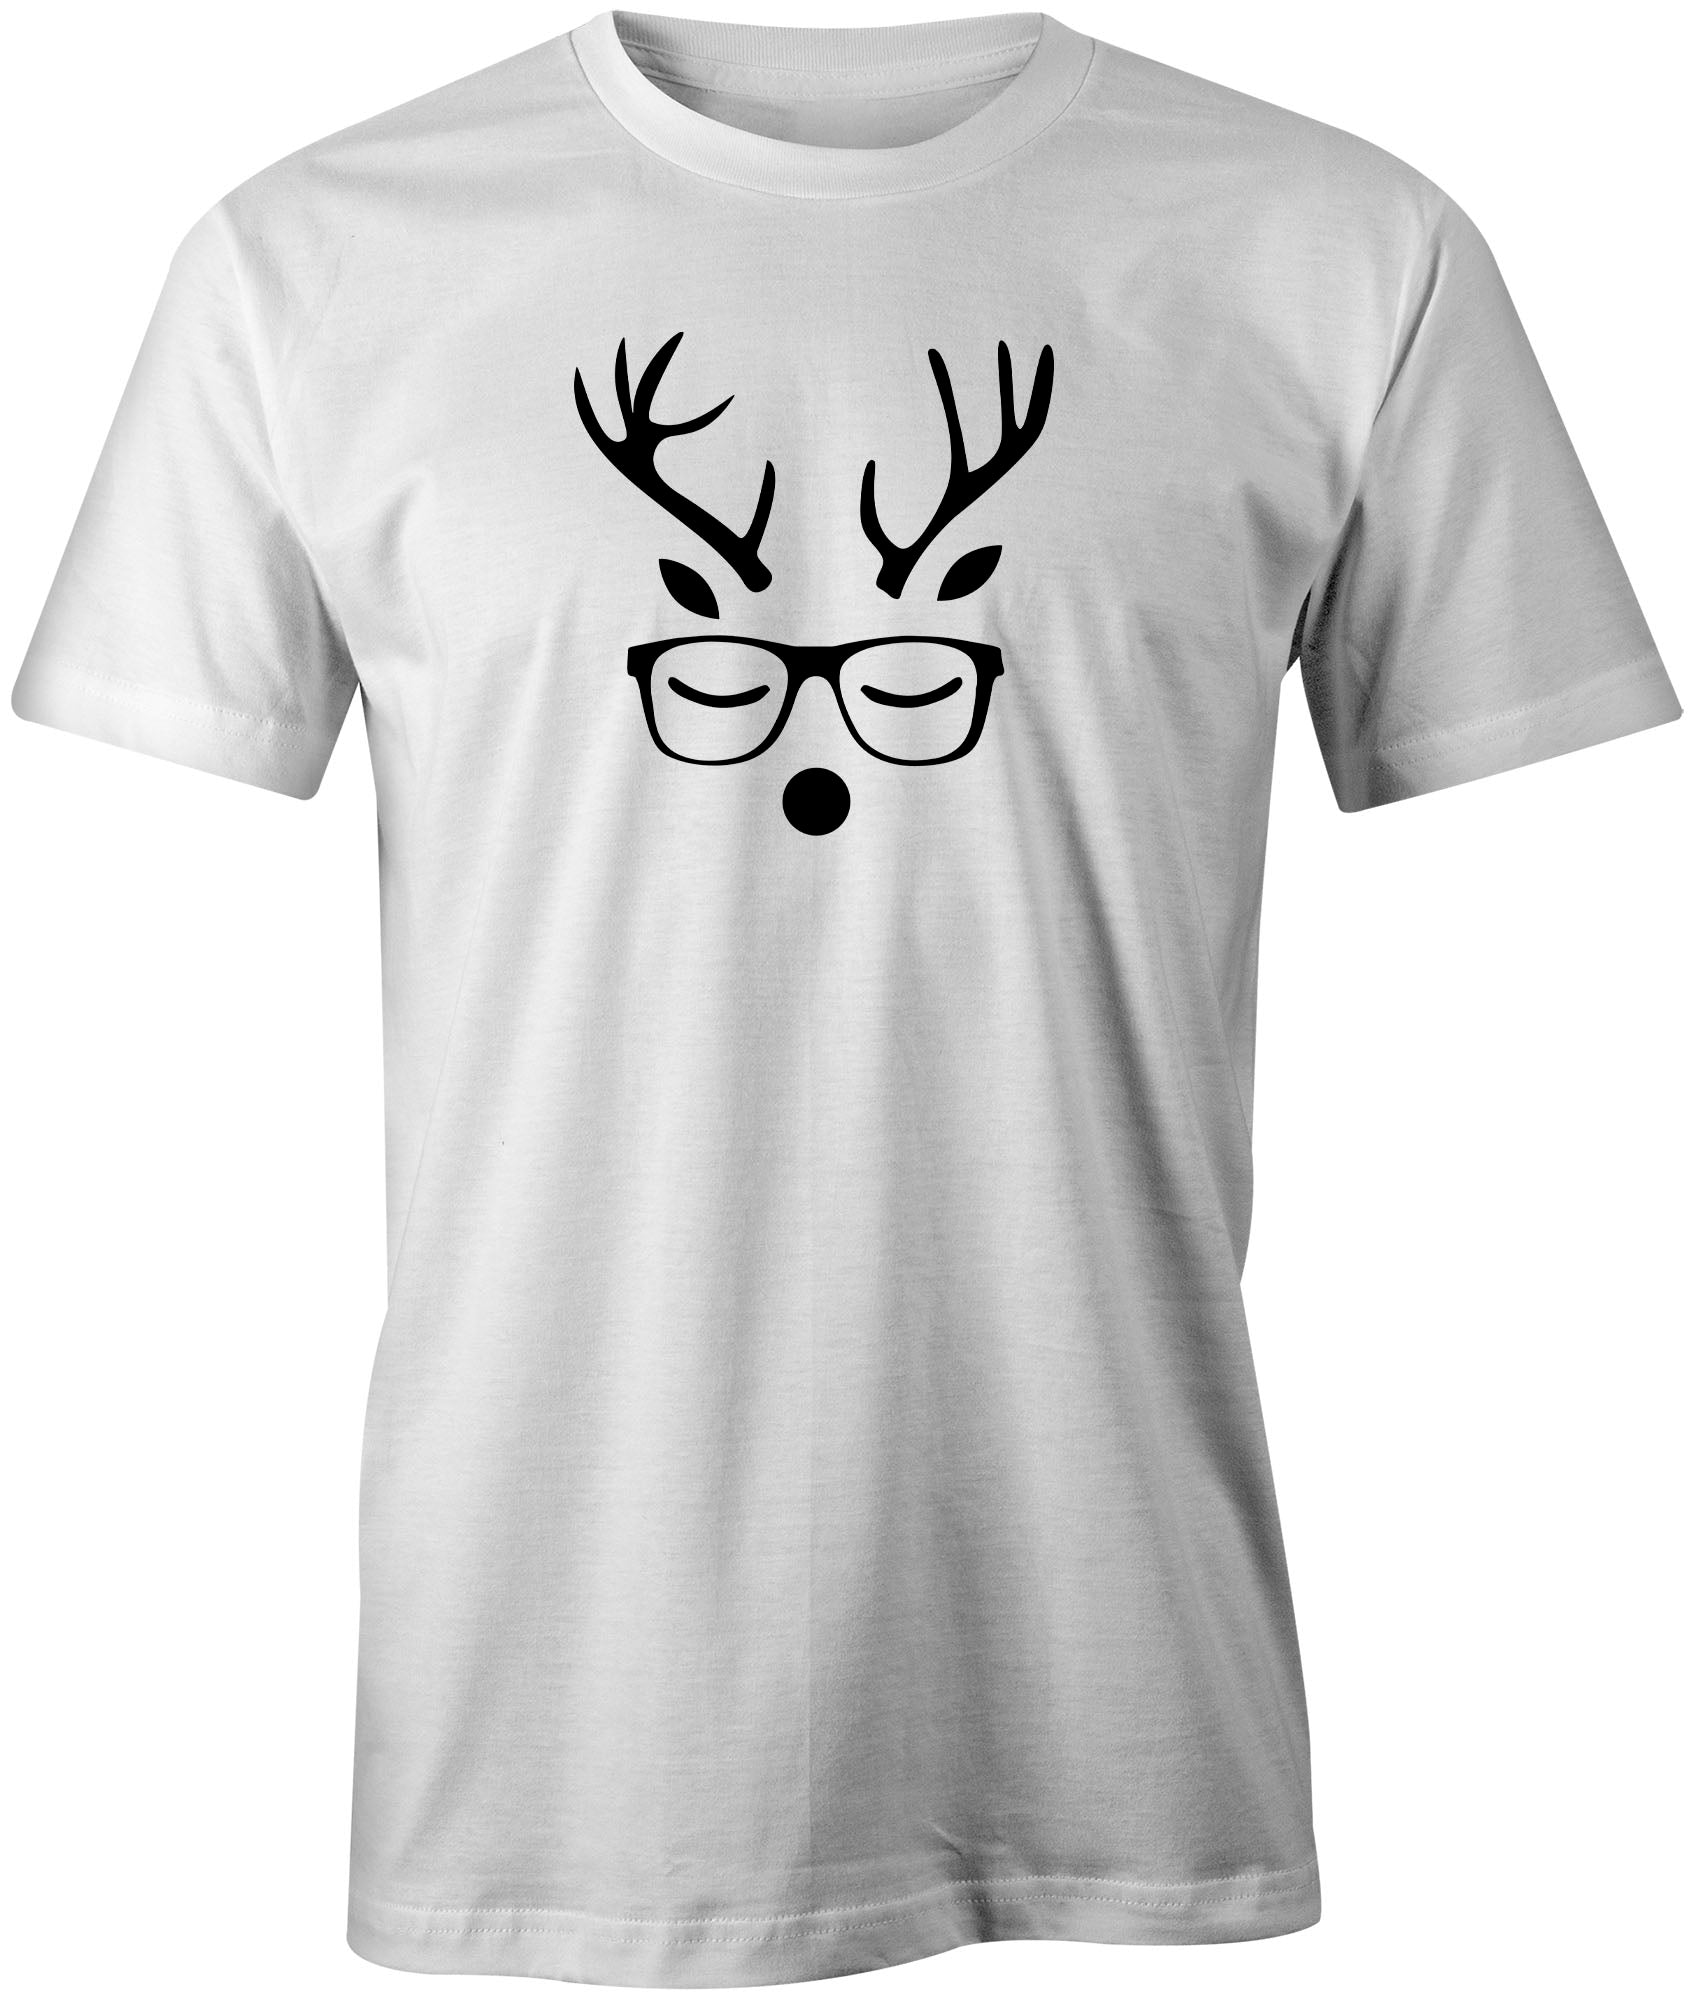 Reindeer Boy Kids Xmas T-Shirt freeshipping - DTF Print Store